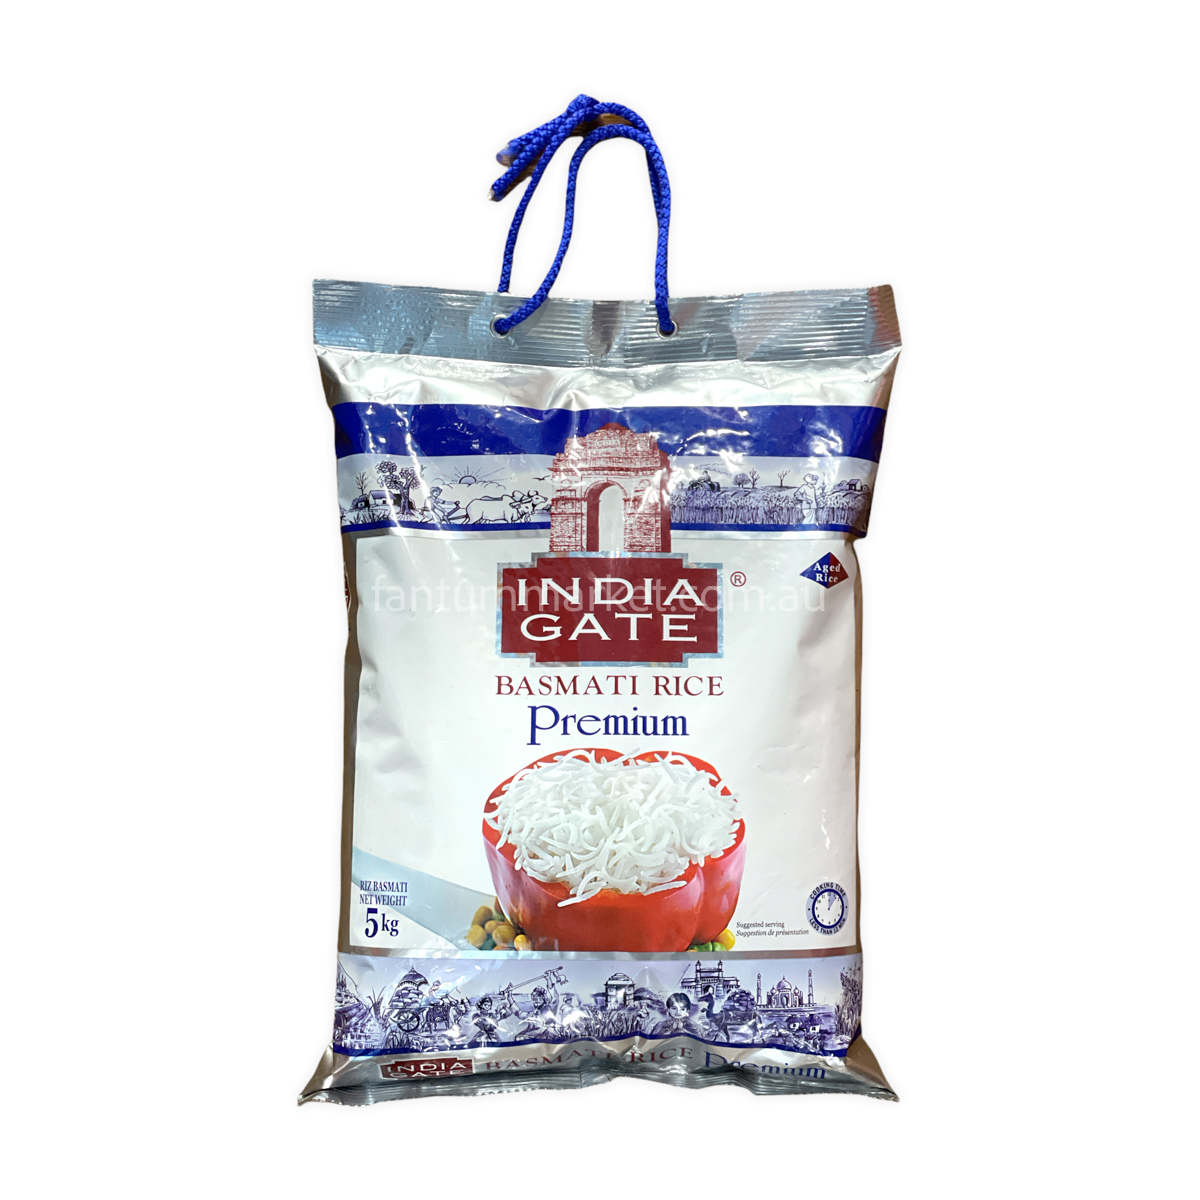 India Gate Basmati Premium Rice 5 kg